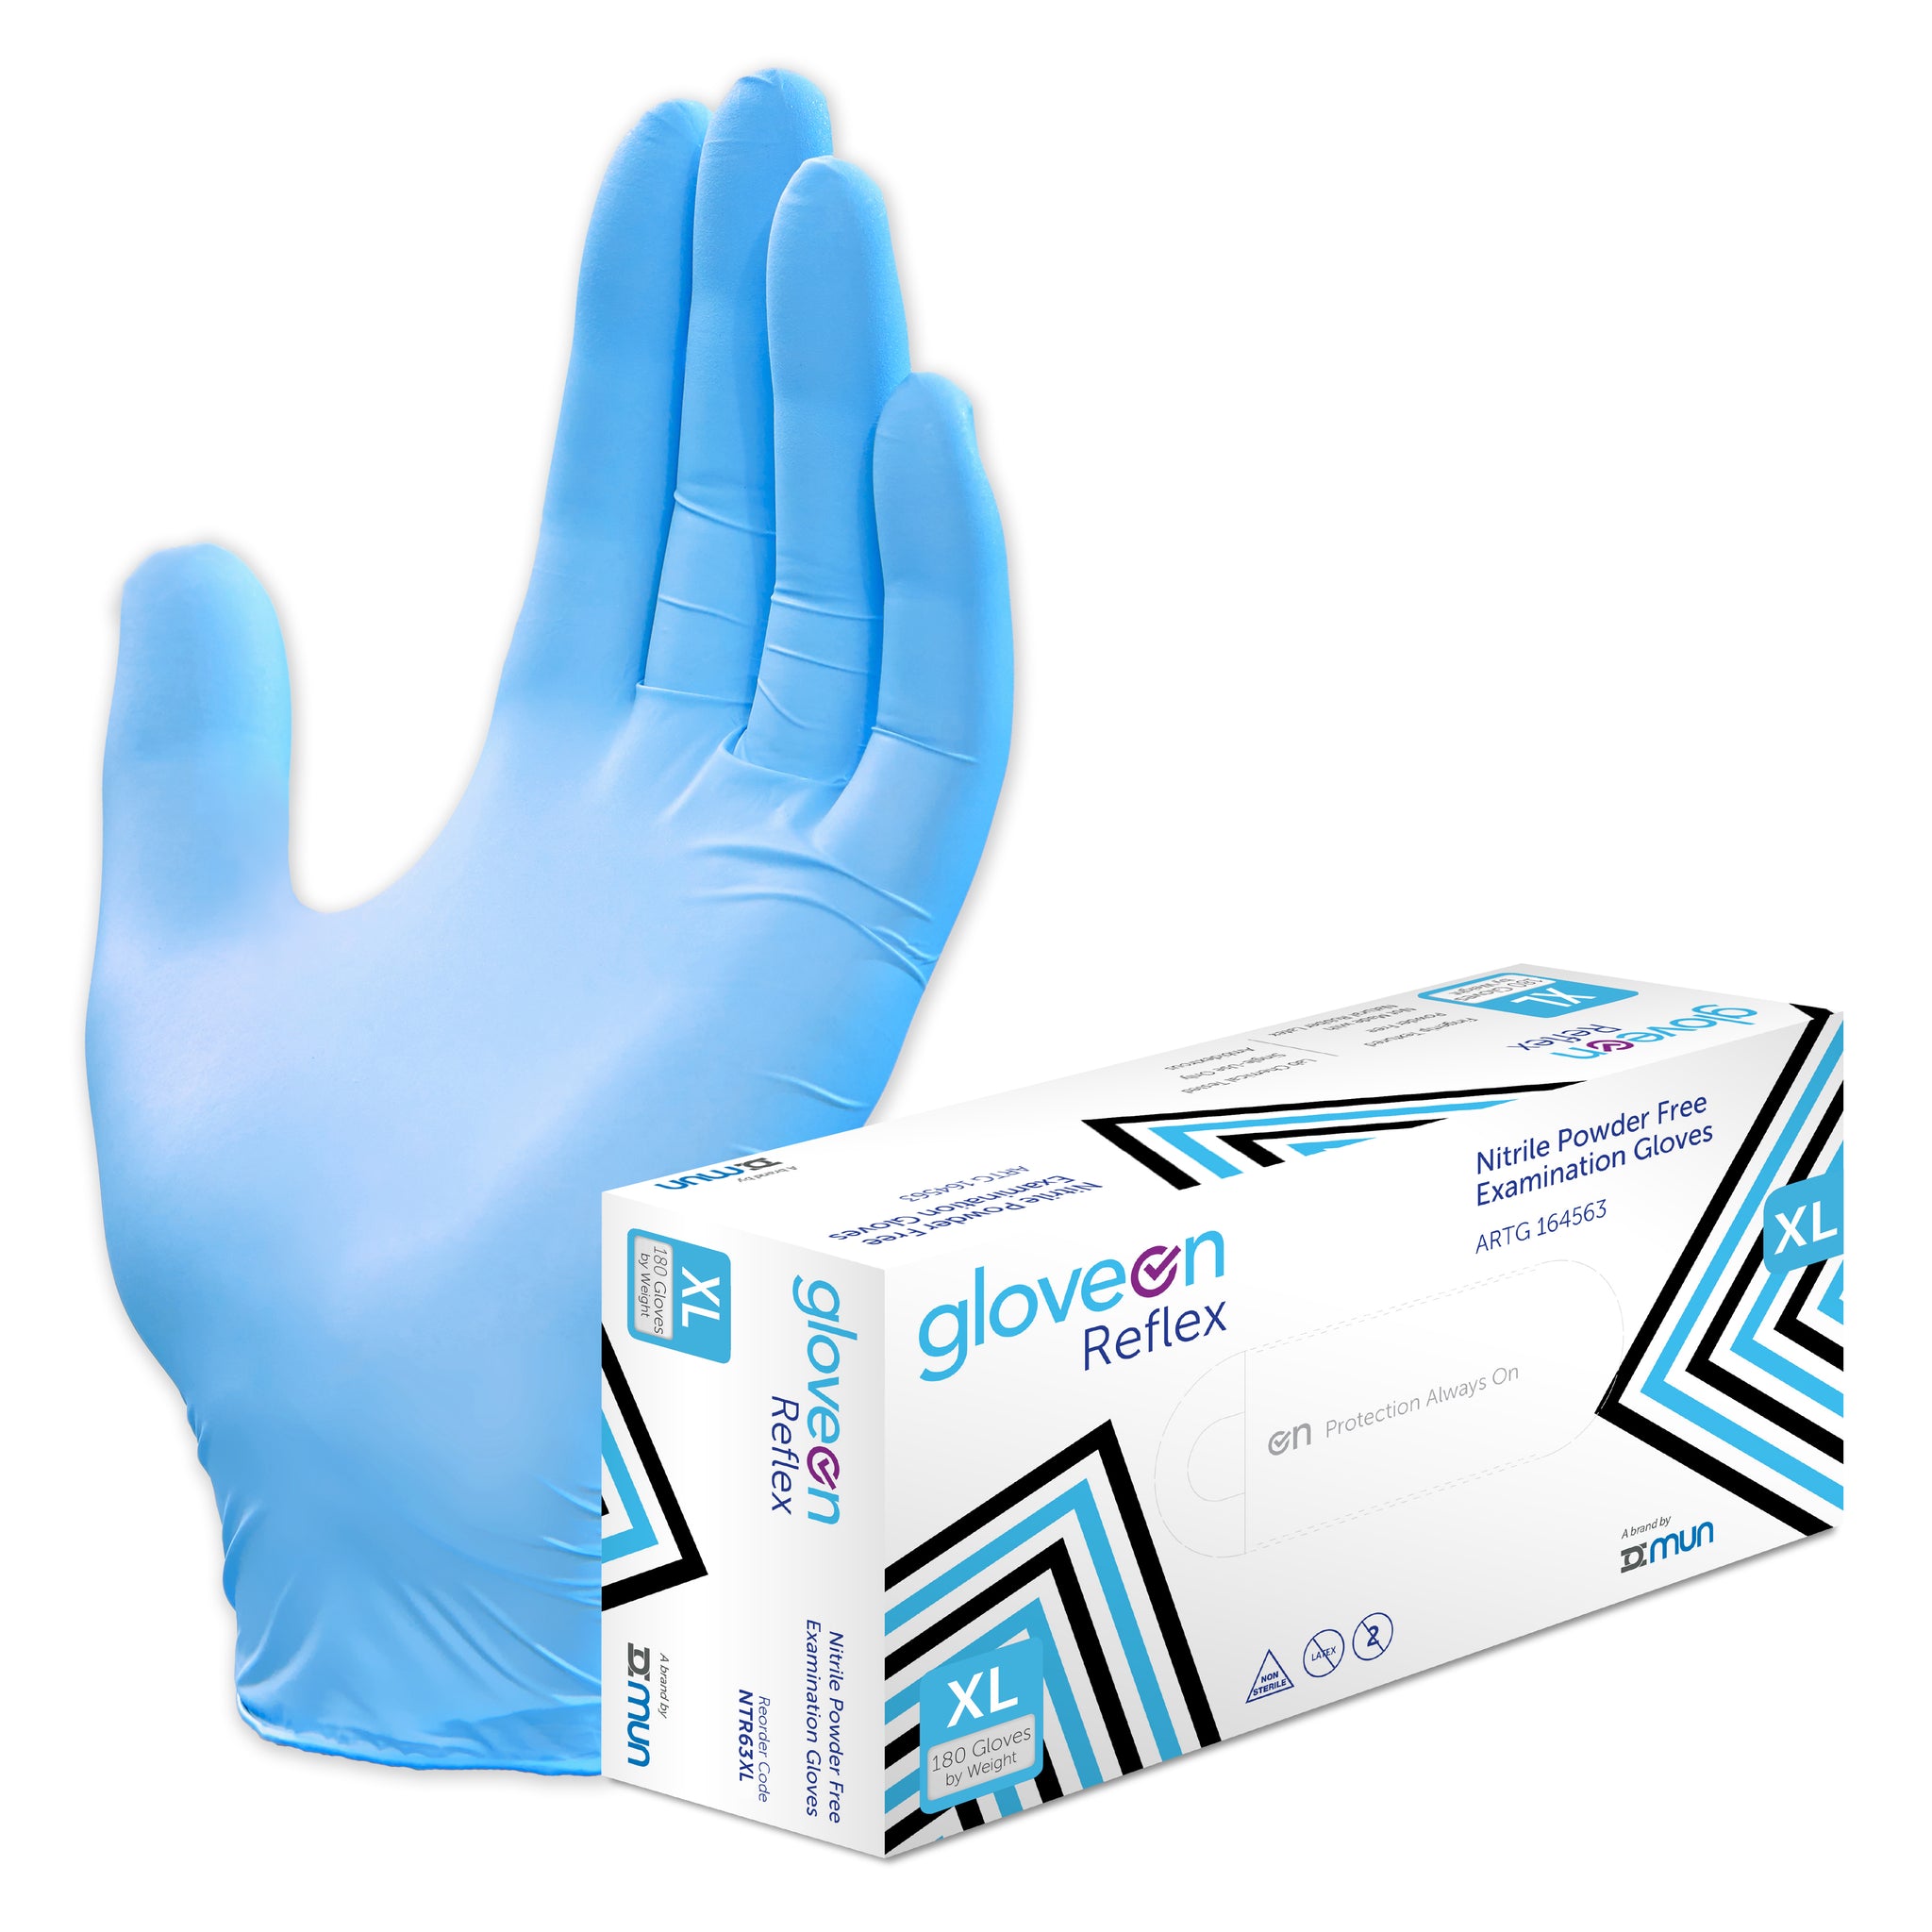 Nitrile Exam Gloves, Powder Free, Non-Sterile, Fingertip Textured, Standard Cuff - Box of 180, XL